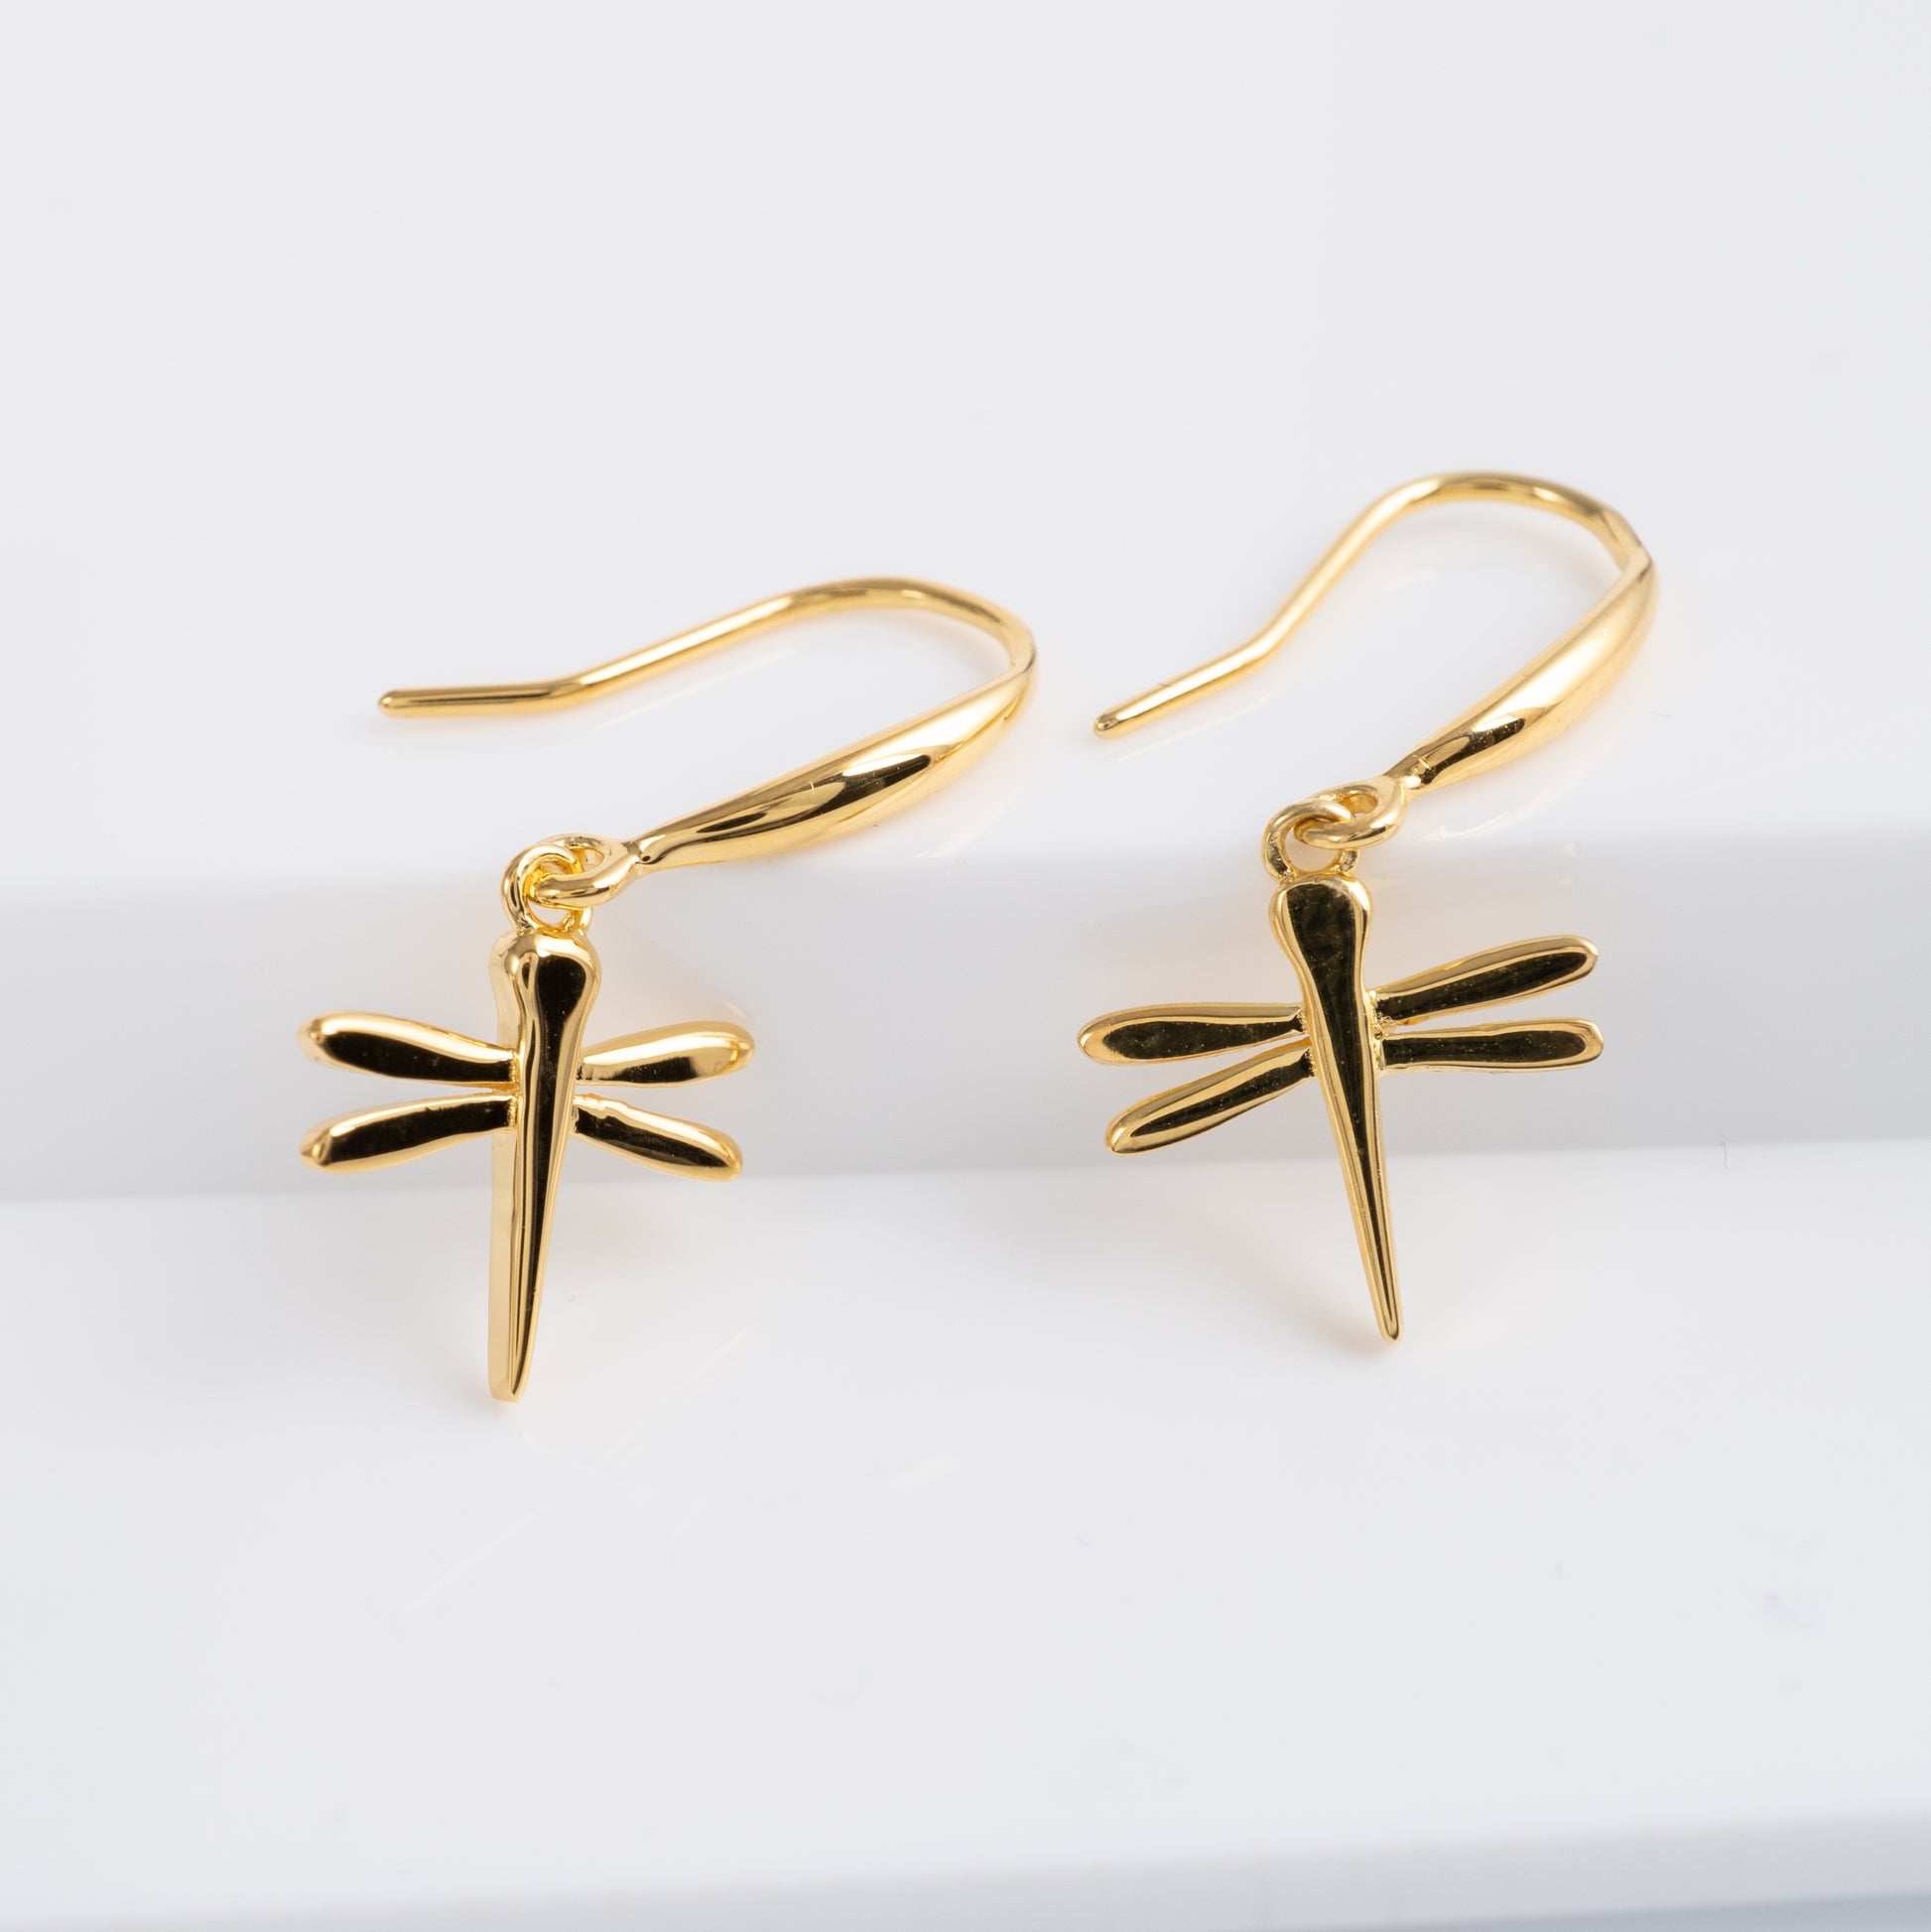 dragonfly earrings gold vermeil